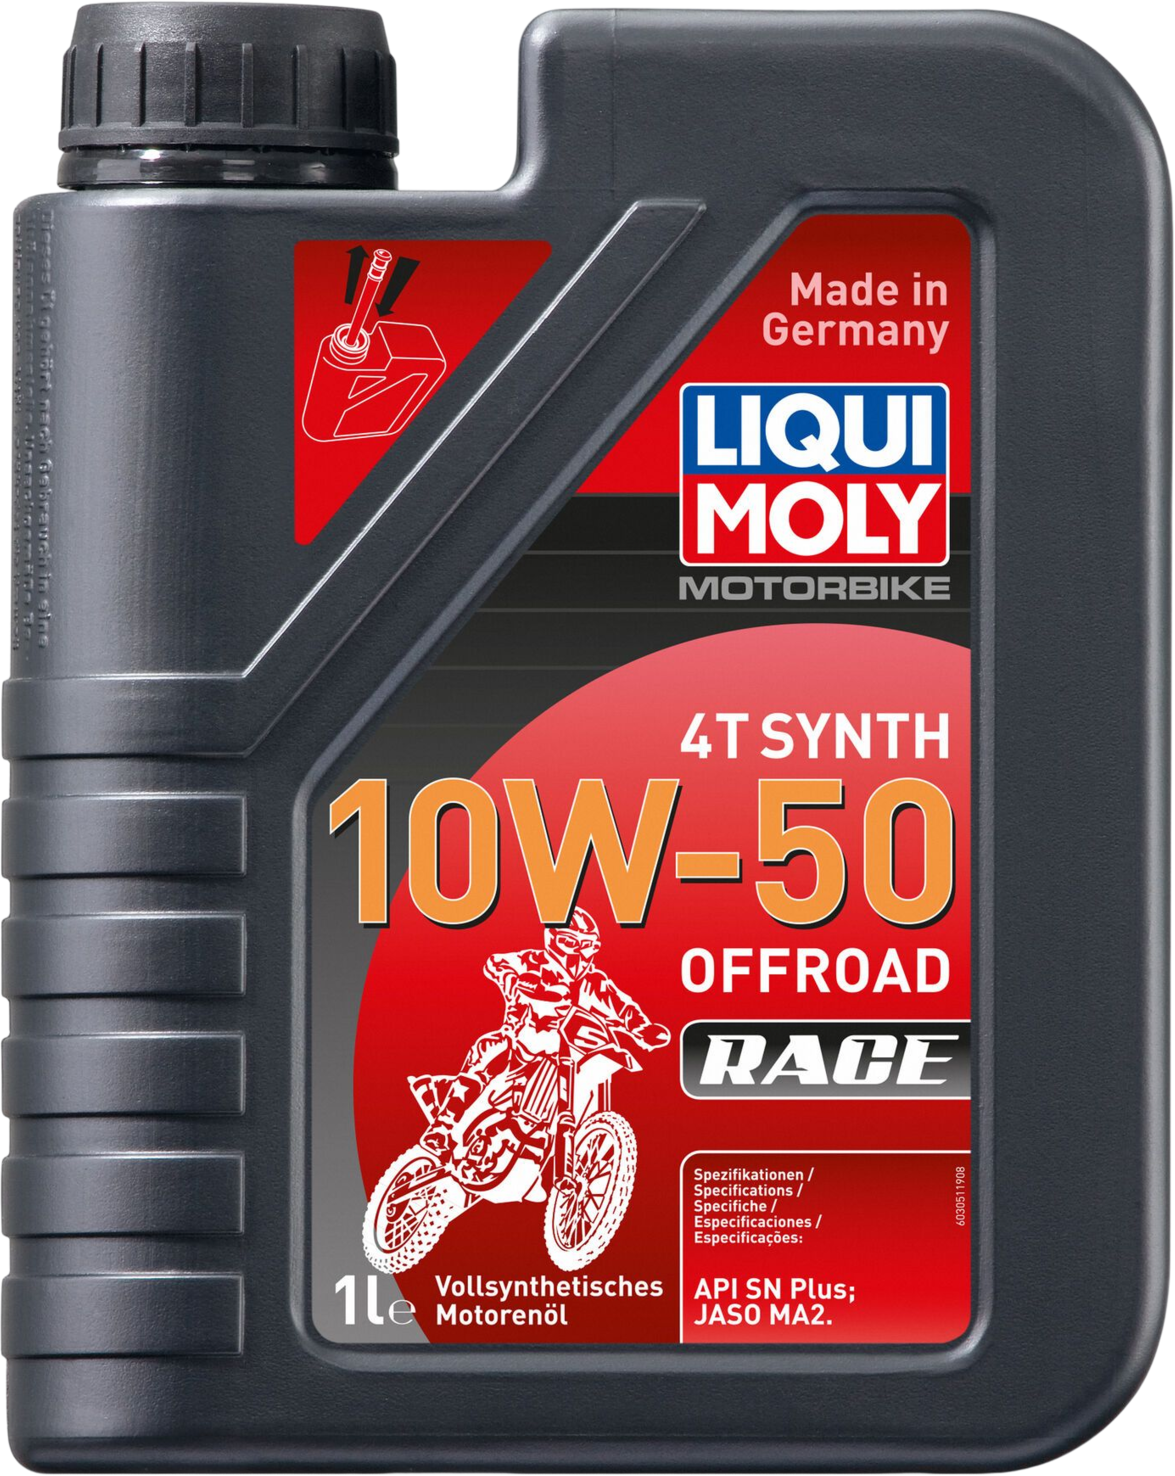 Liqui Moly Motorbike 4T Synth 10W-50 Offroad Race, 1 lt